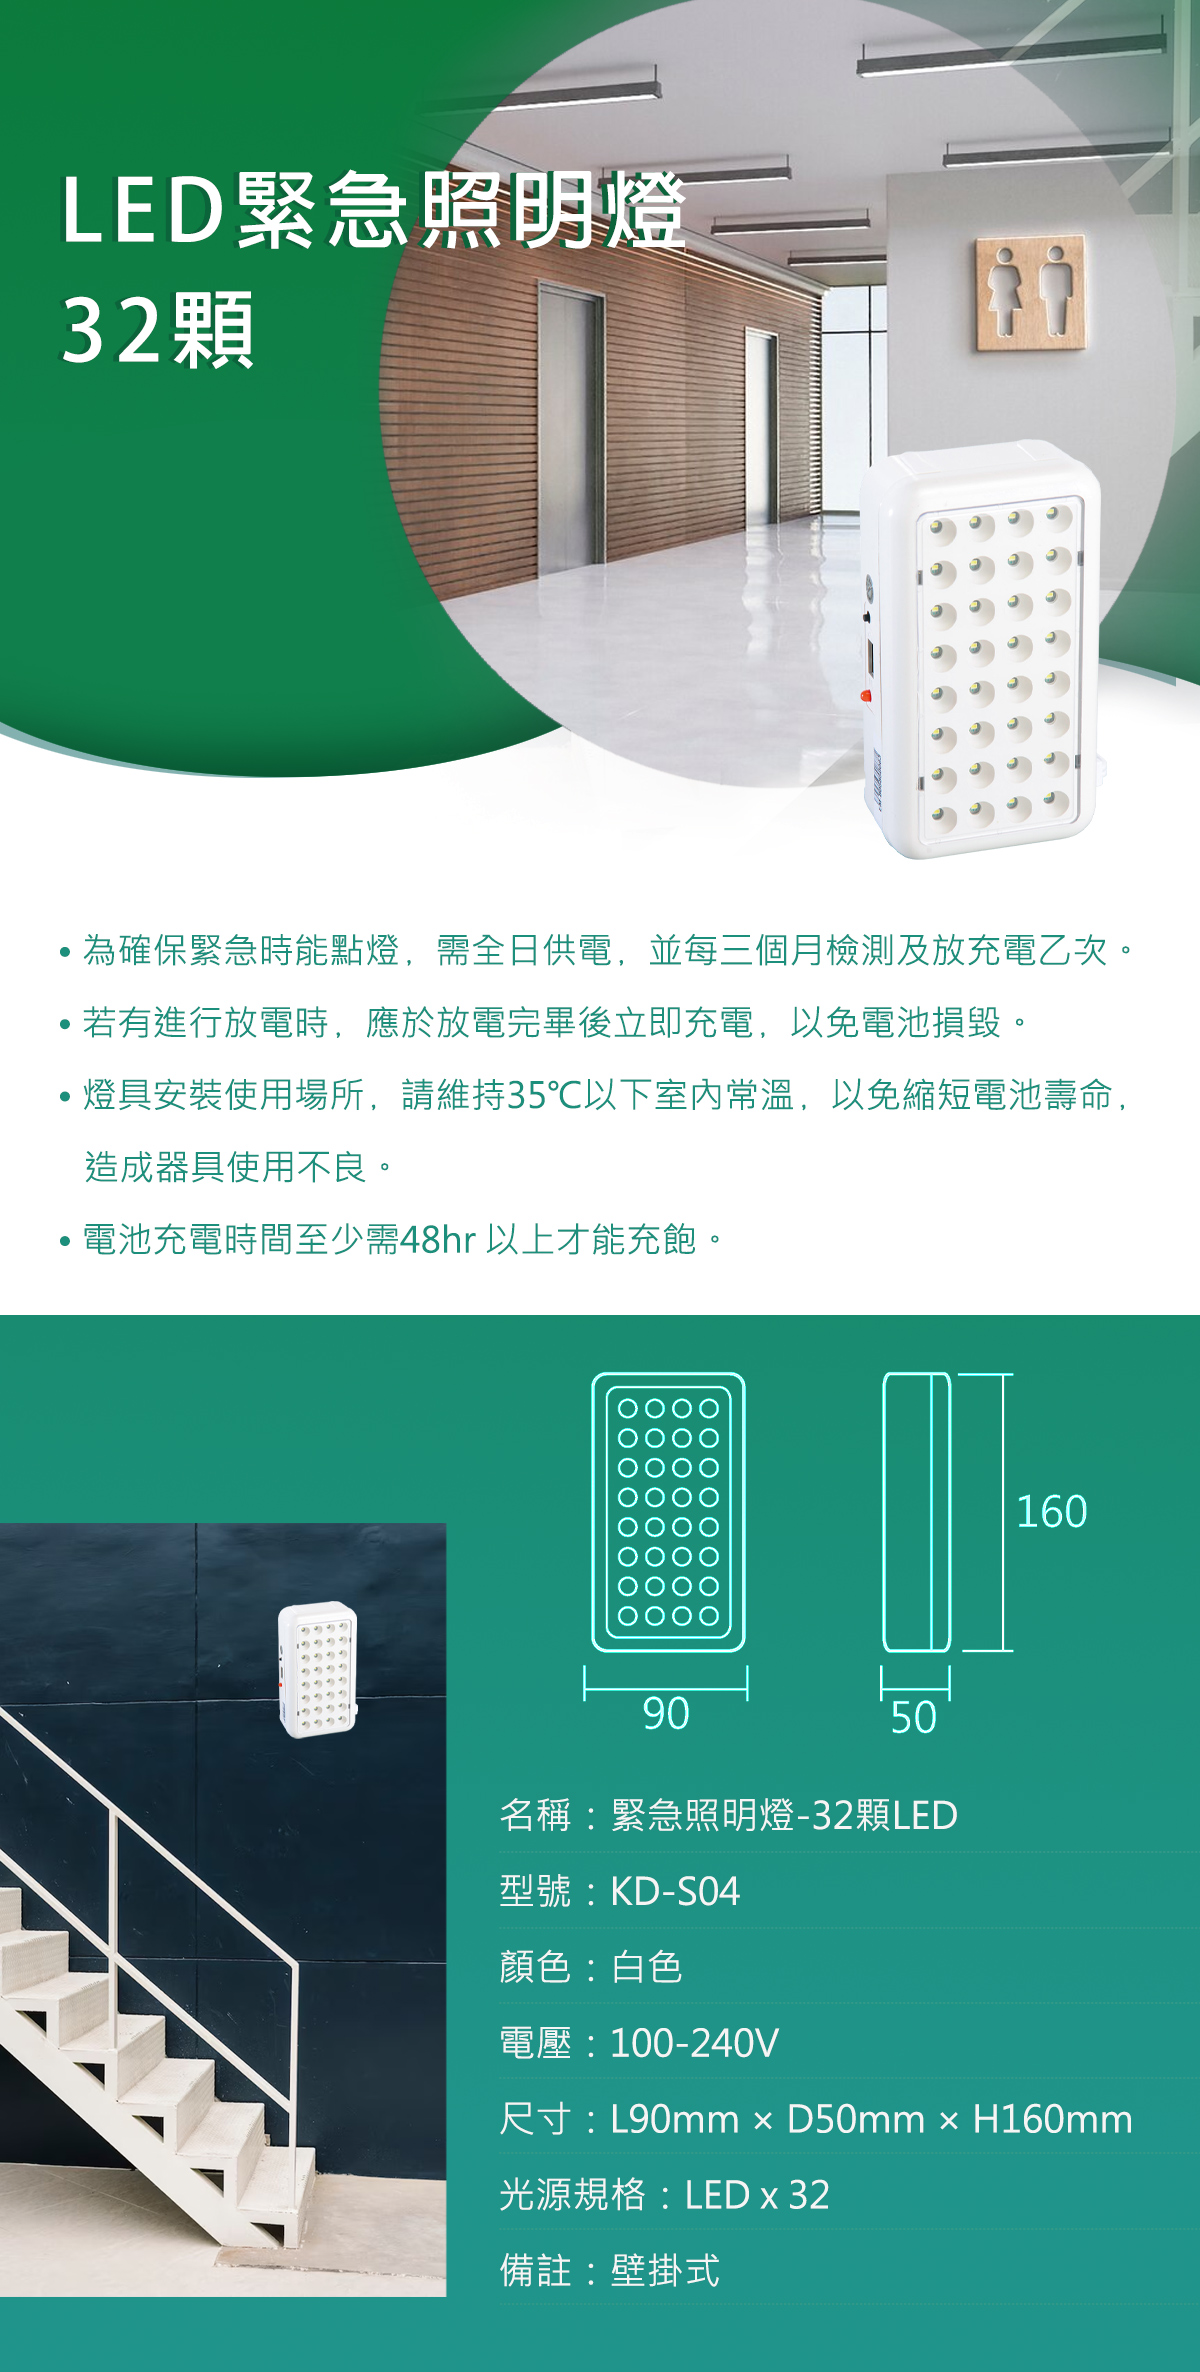 【KAO'S】LED 緊急照明燈 全電壓 台灣製造 LEDX32